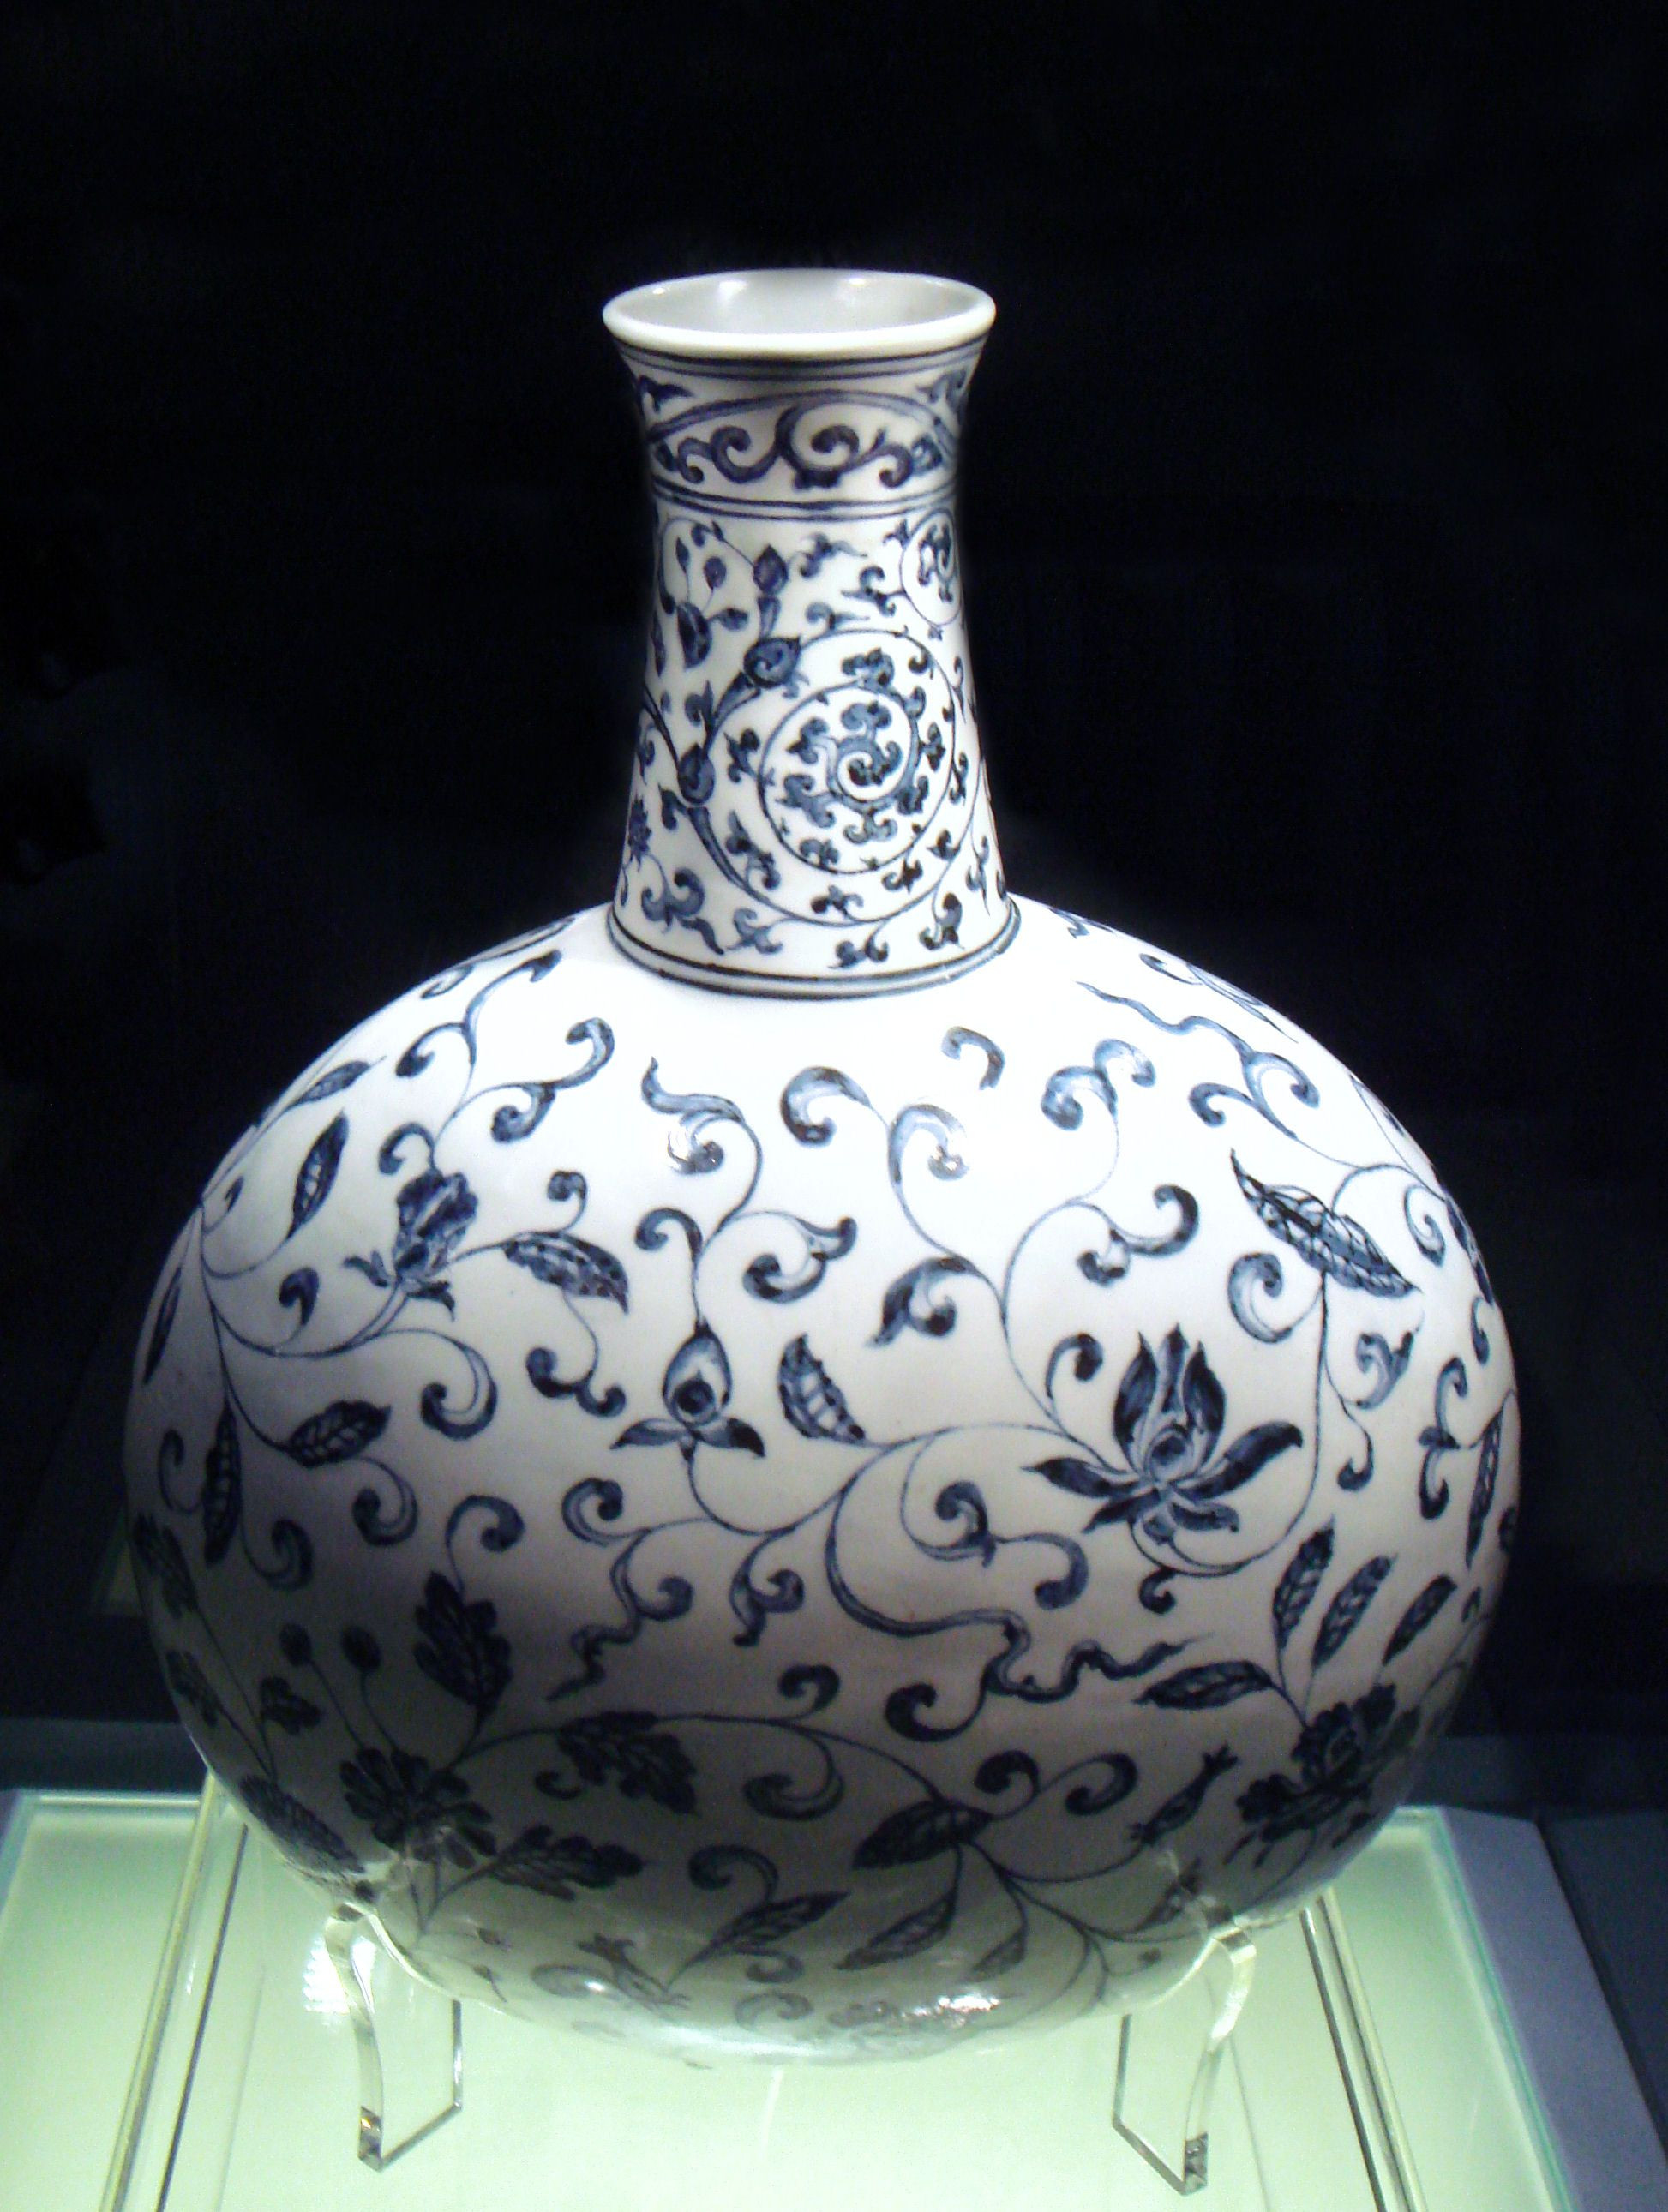 ceramic vase set of blue and white ceramic vase inspirational file blue and white vase regarding blue and white ceramic vase inspirational file blue and white vase jingdezhen ming yongle 1403 1424